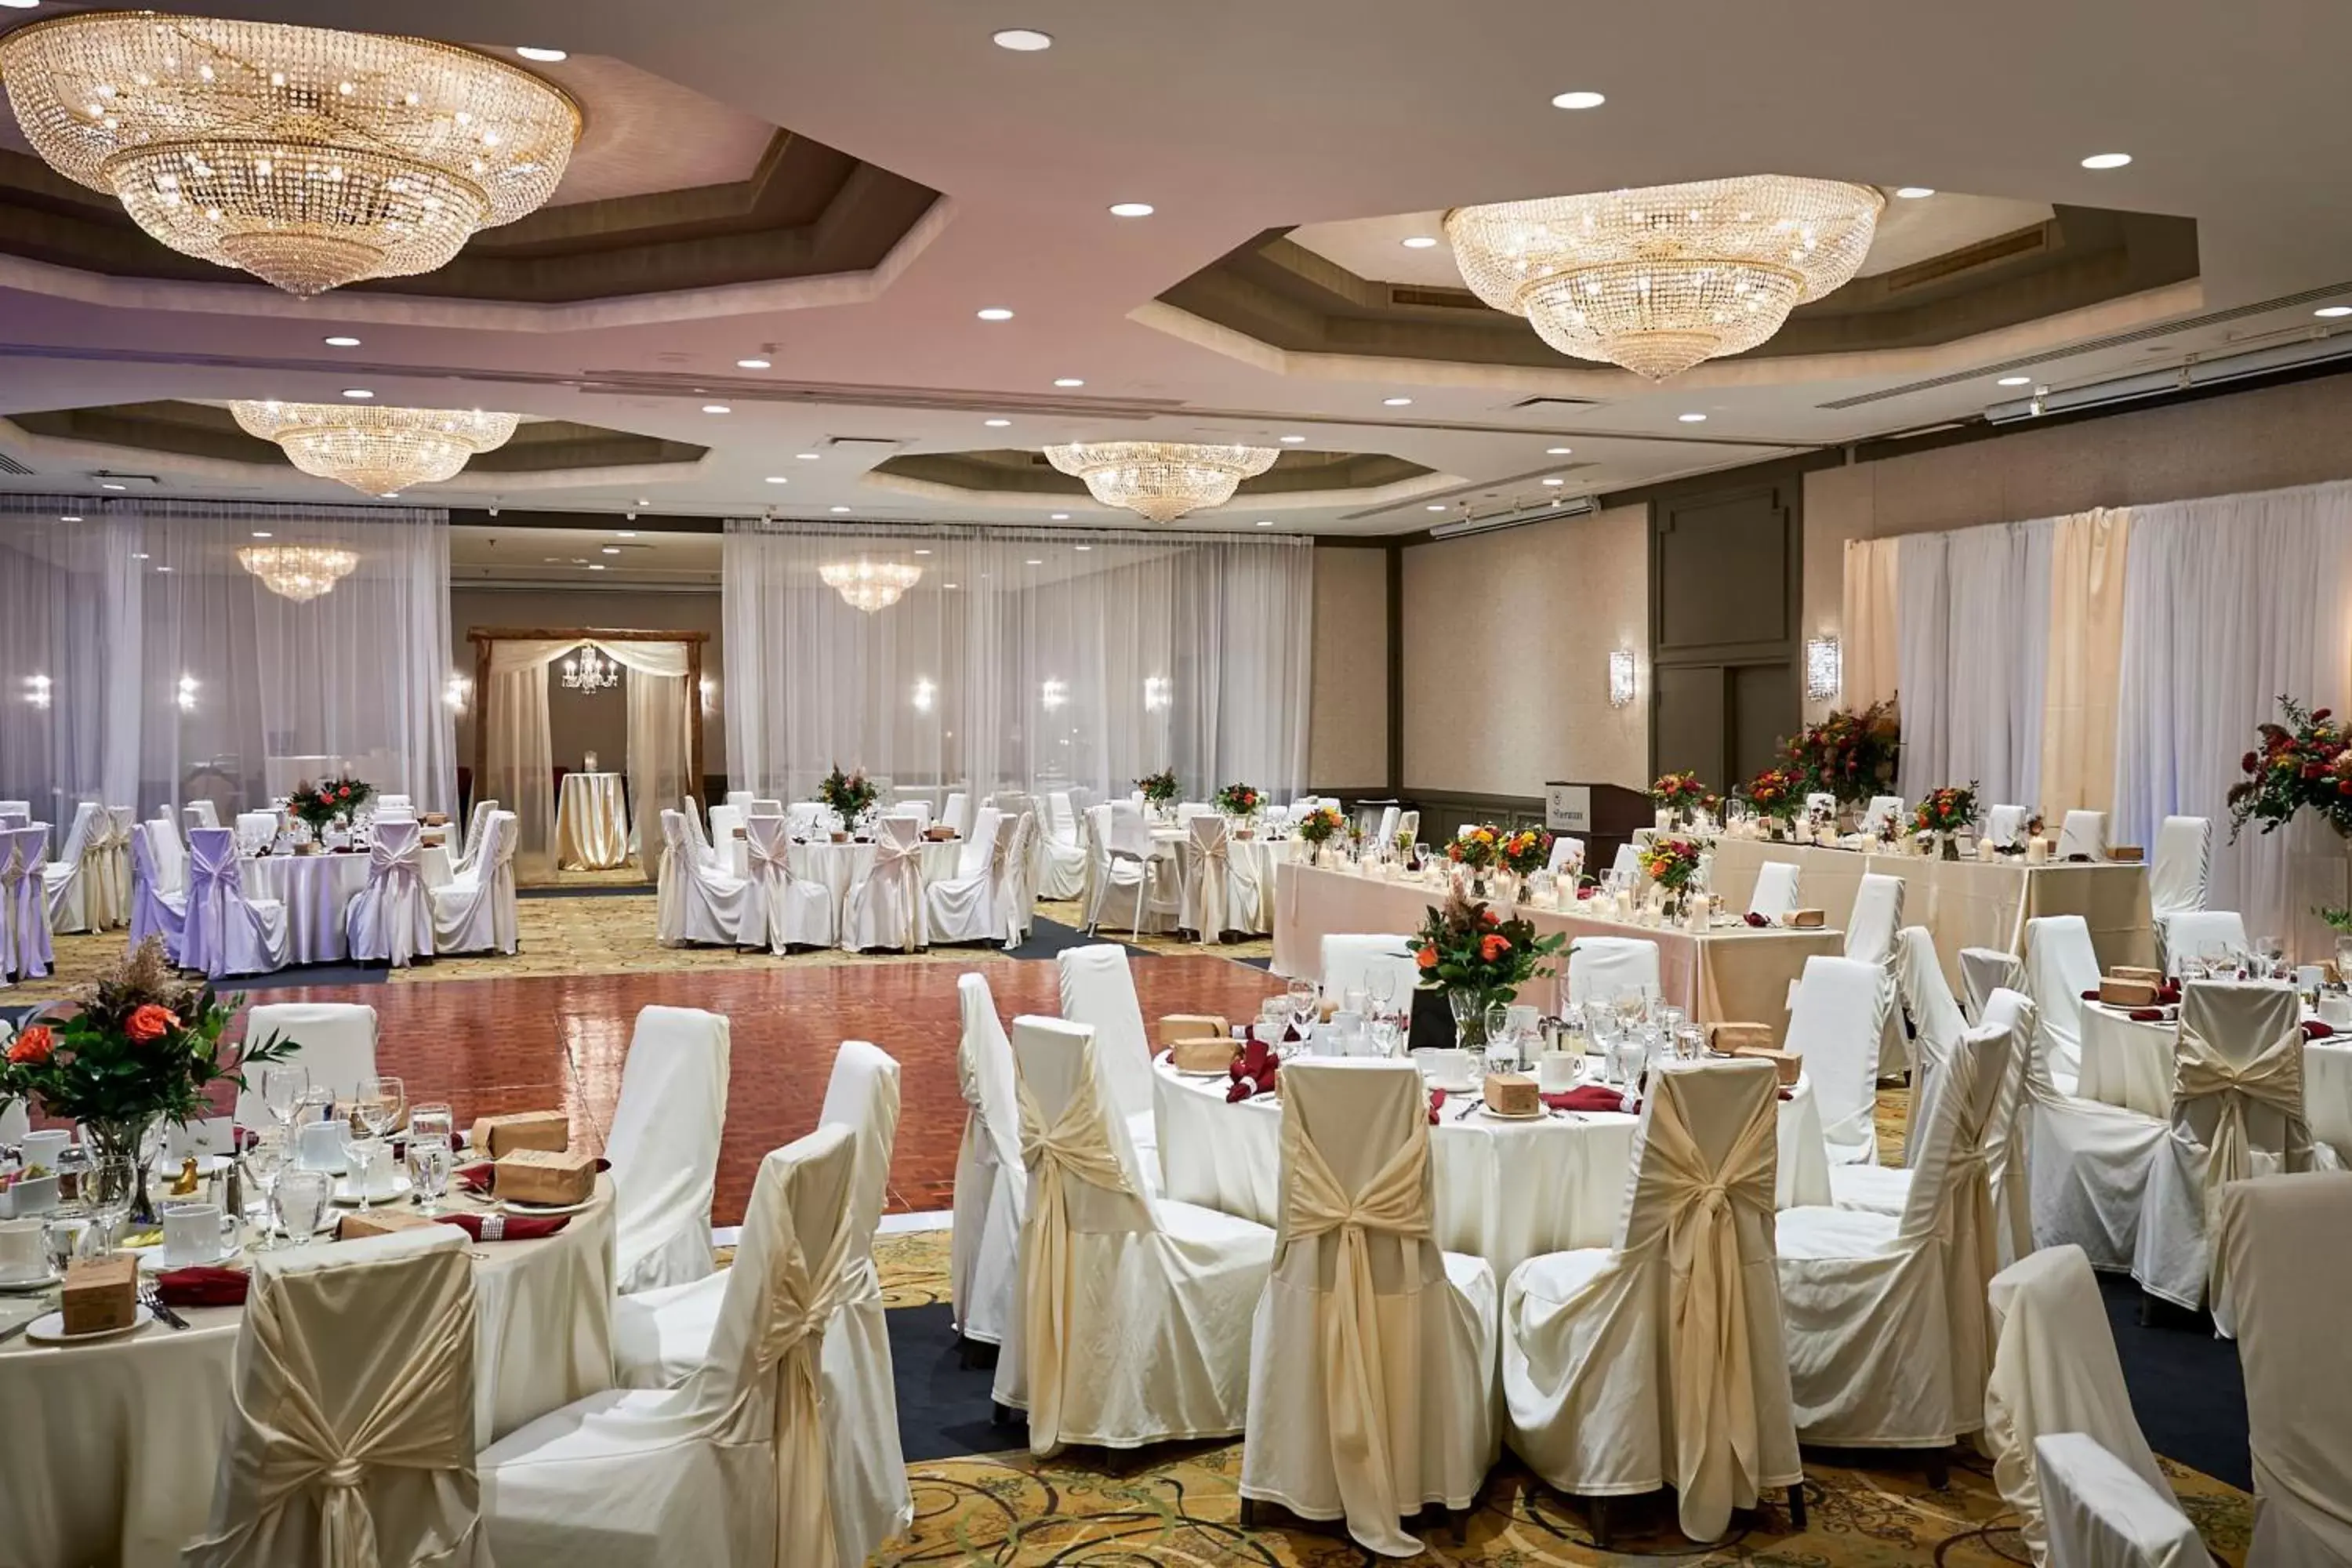 Banquet/Function facilities, Banquet Facilities in Sheraton Hamilton Hotel